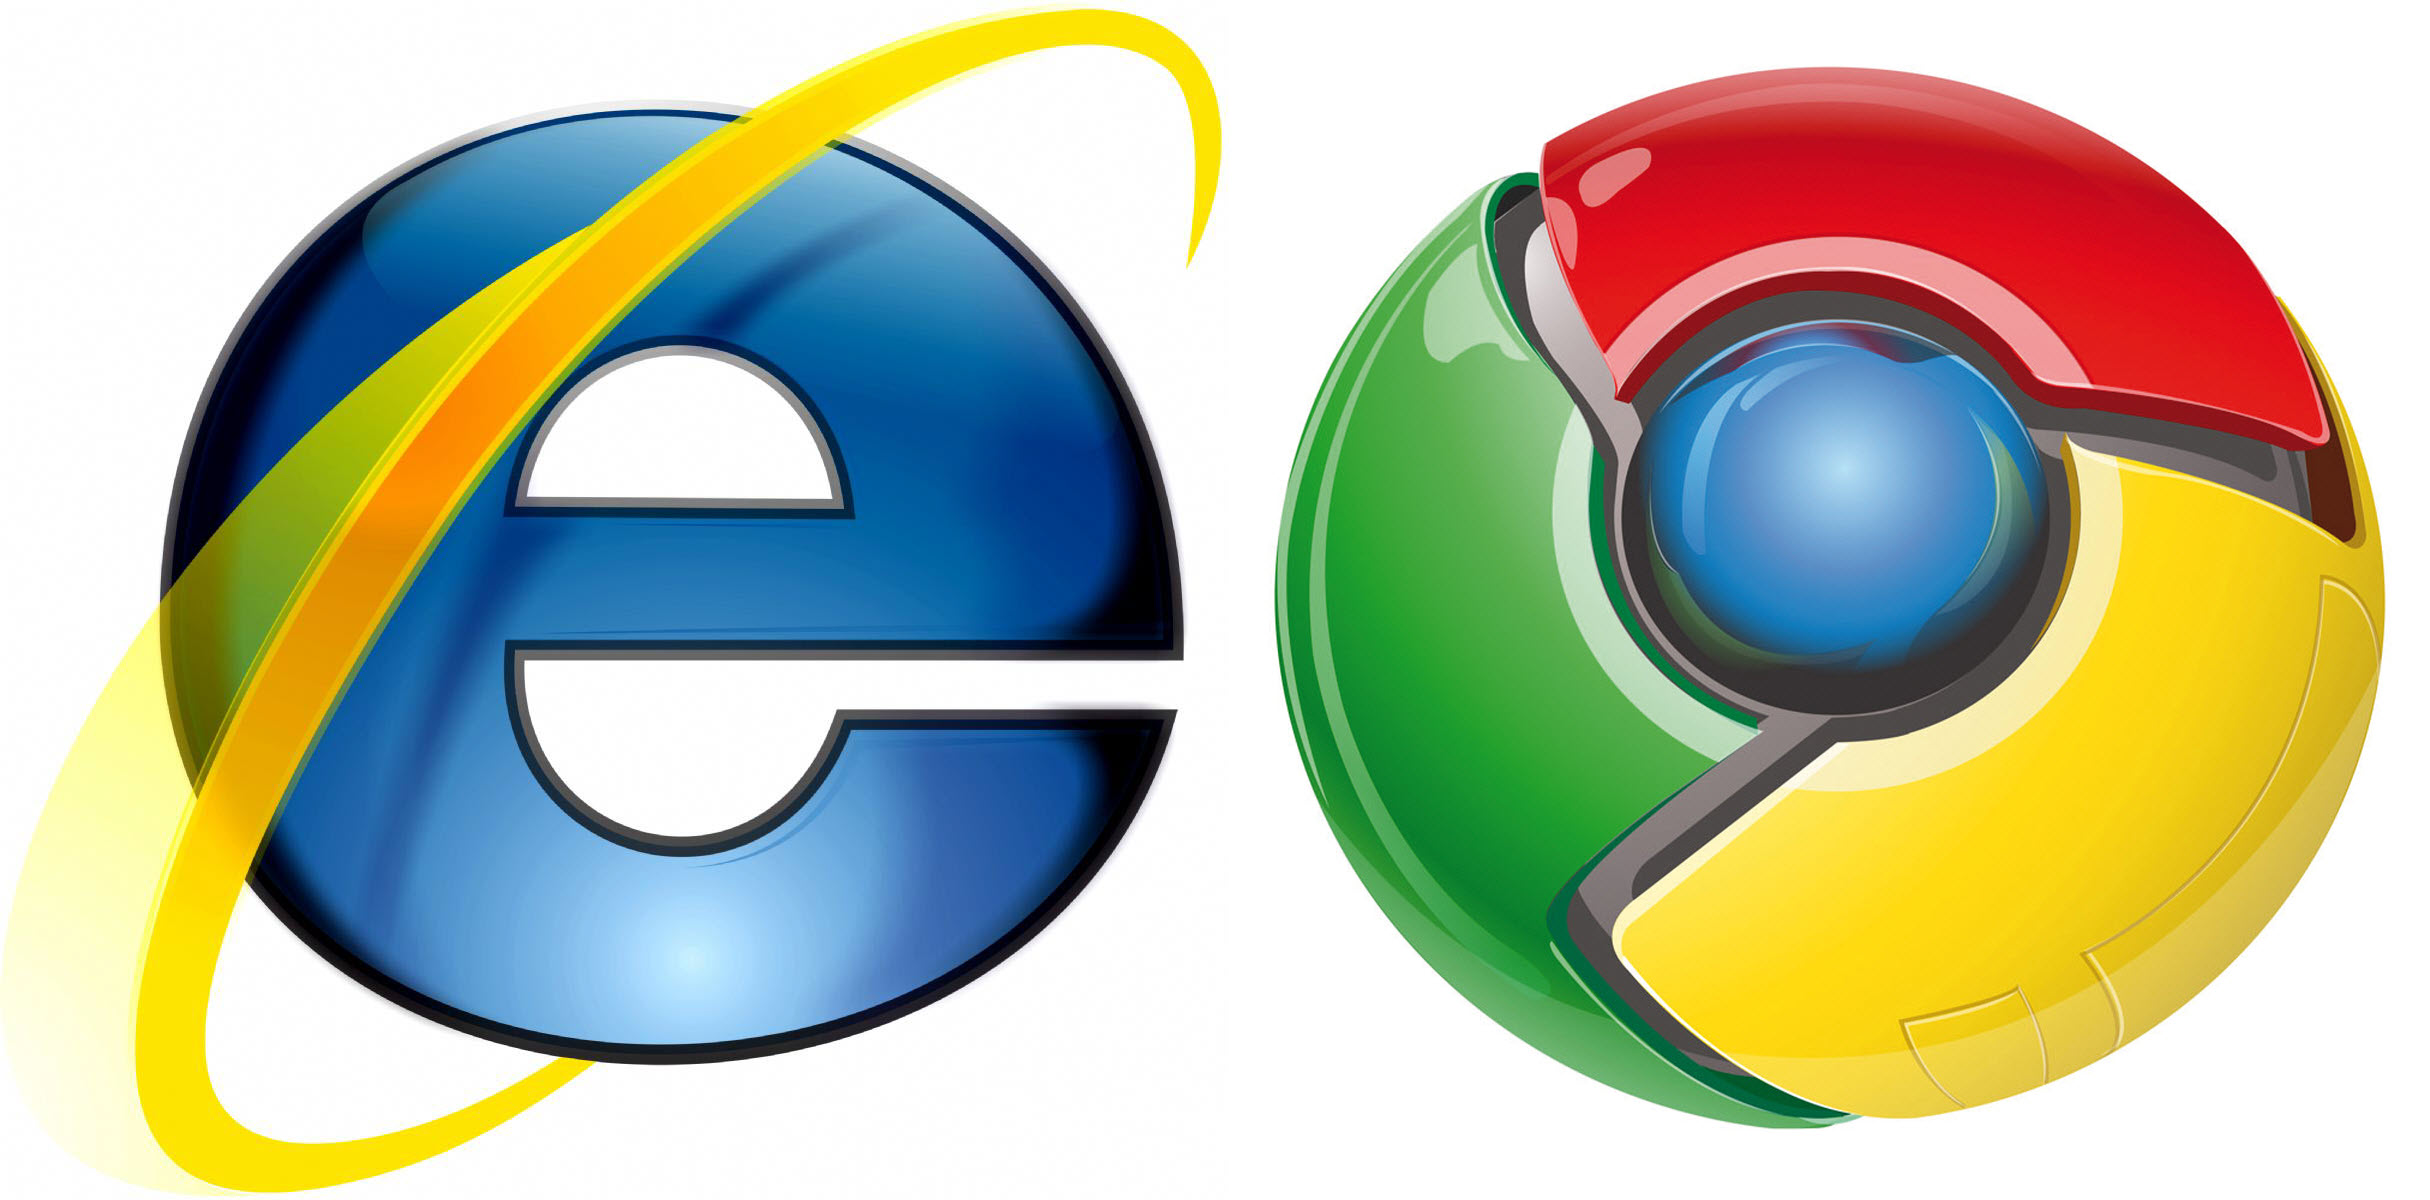 Browser Wars 2012 – Who Won?